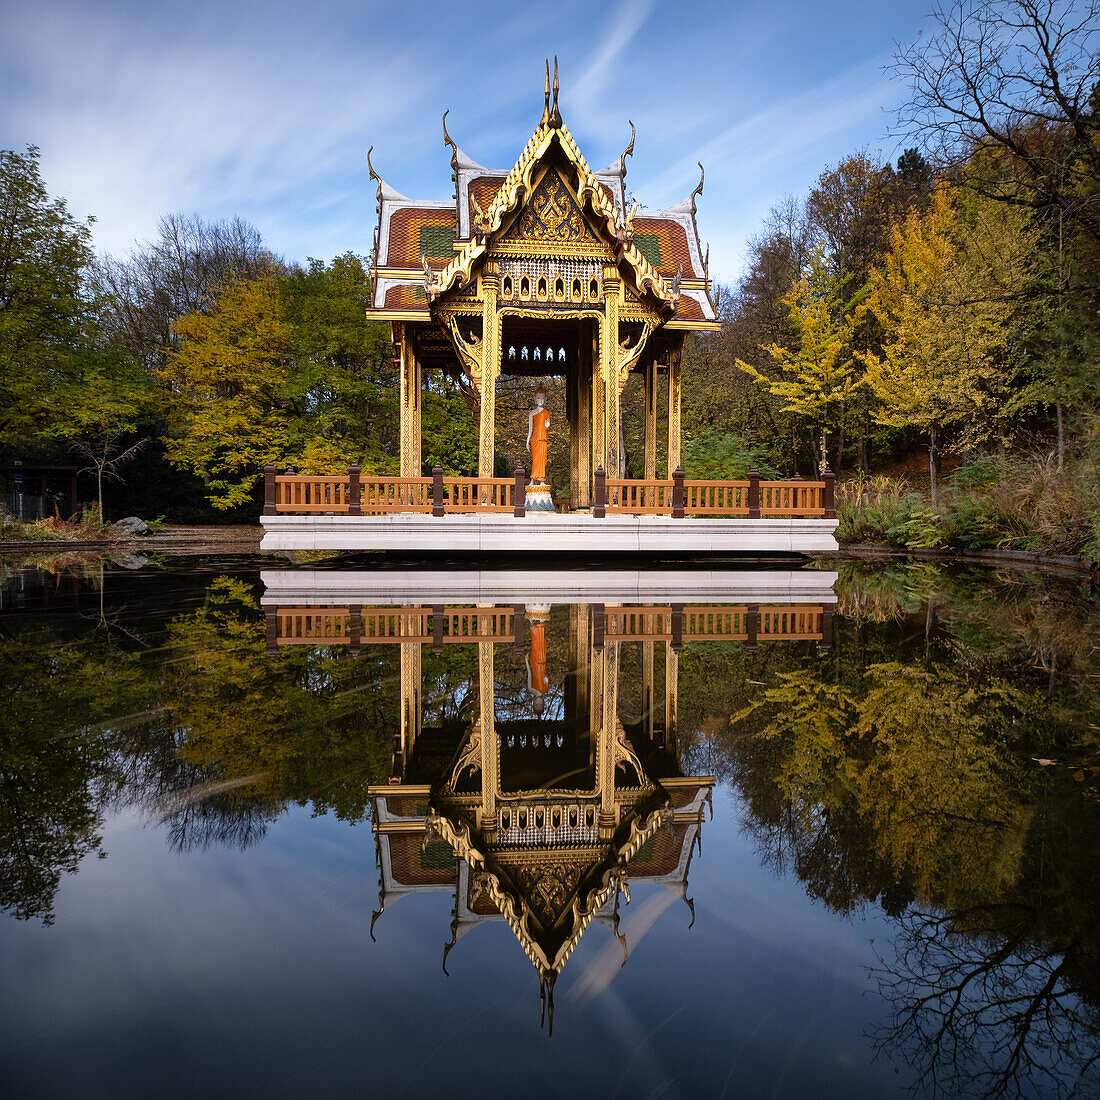 Thai Sala with Buddha statue in a water basin, temple, Westpark, Munich, Upper Bavaria, Bavaria, Germany, Europe